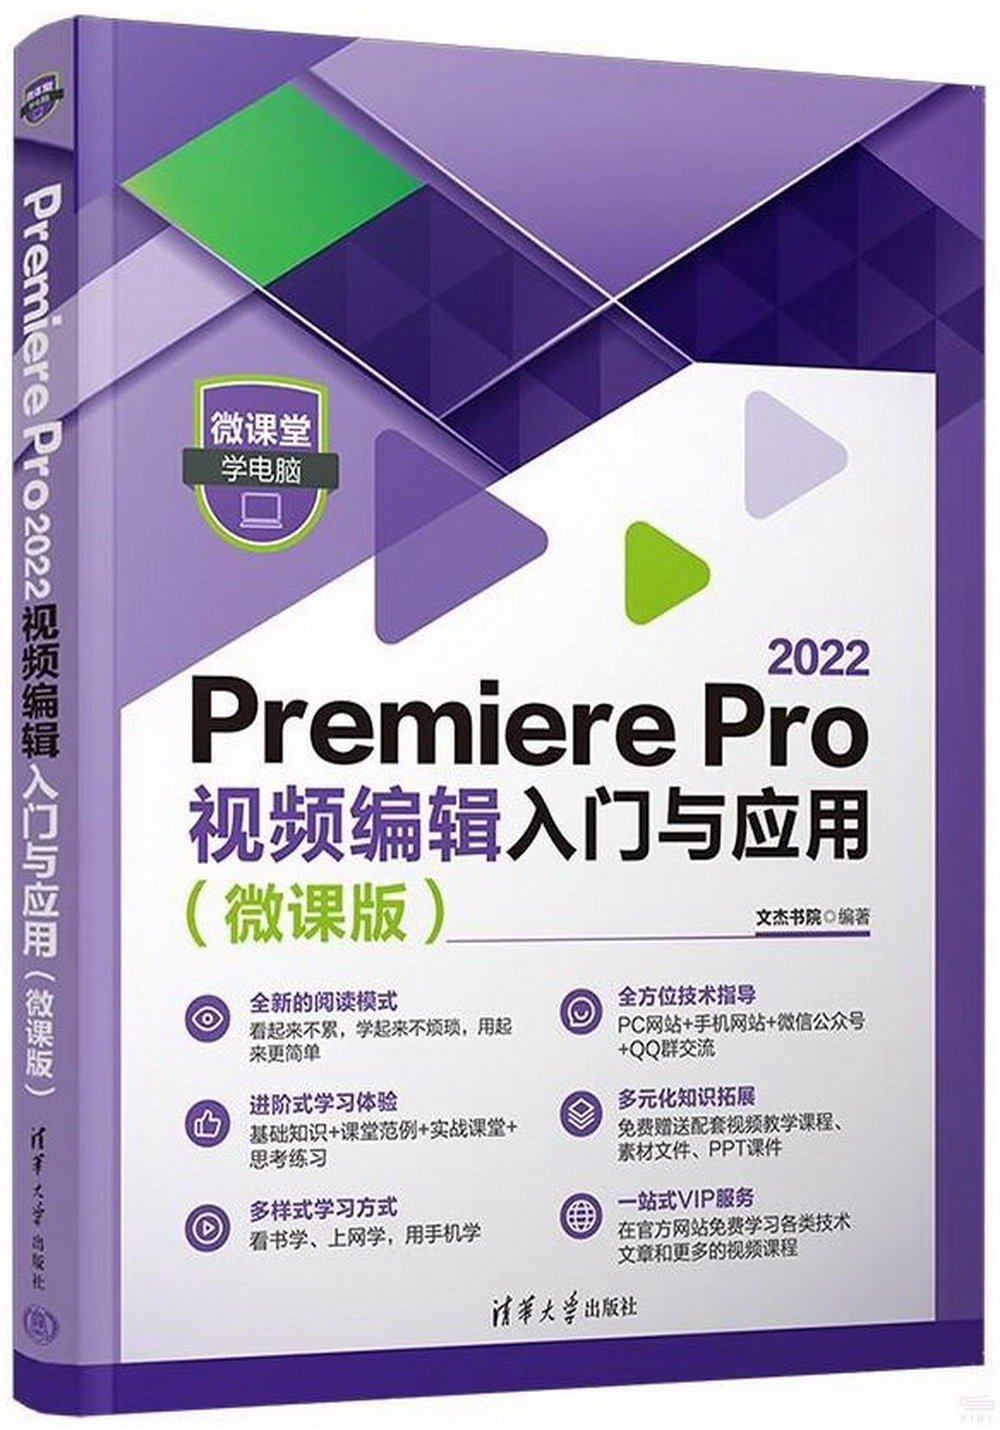 Premiere Pro 2022視頻編輯入門與應用（微課版）